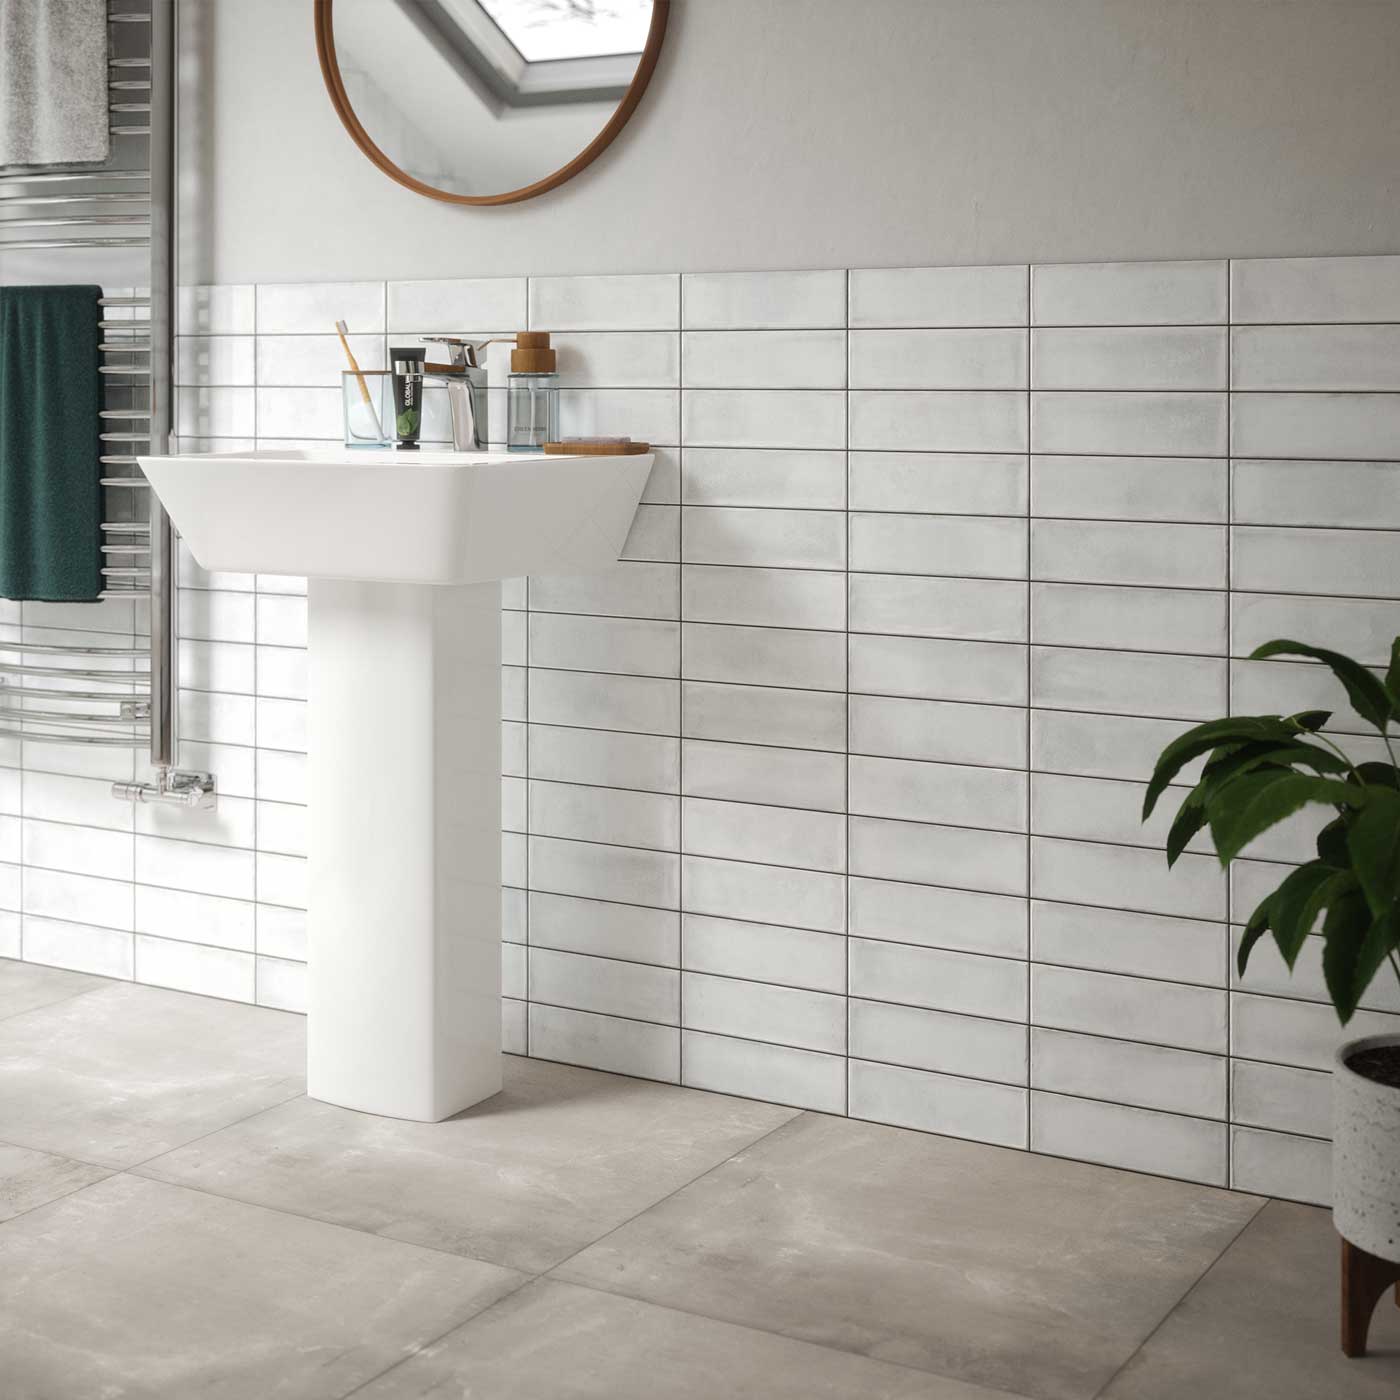 Johnsons Melrose Bone White Metro Tiles used as splashback bathroom wall tiles with a sink